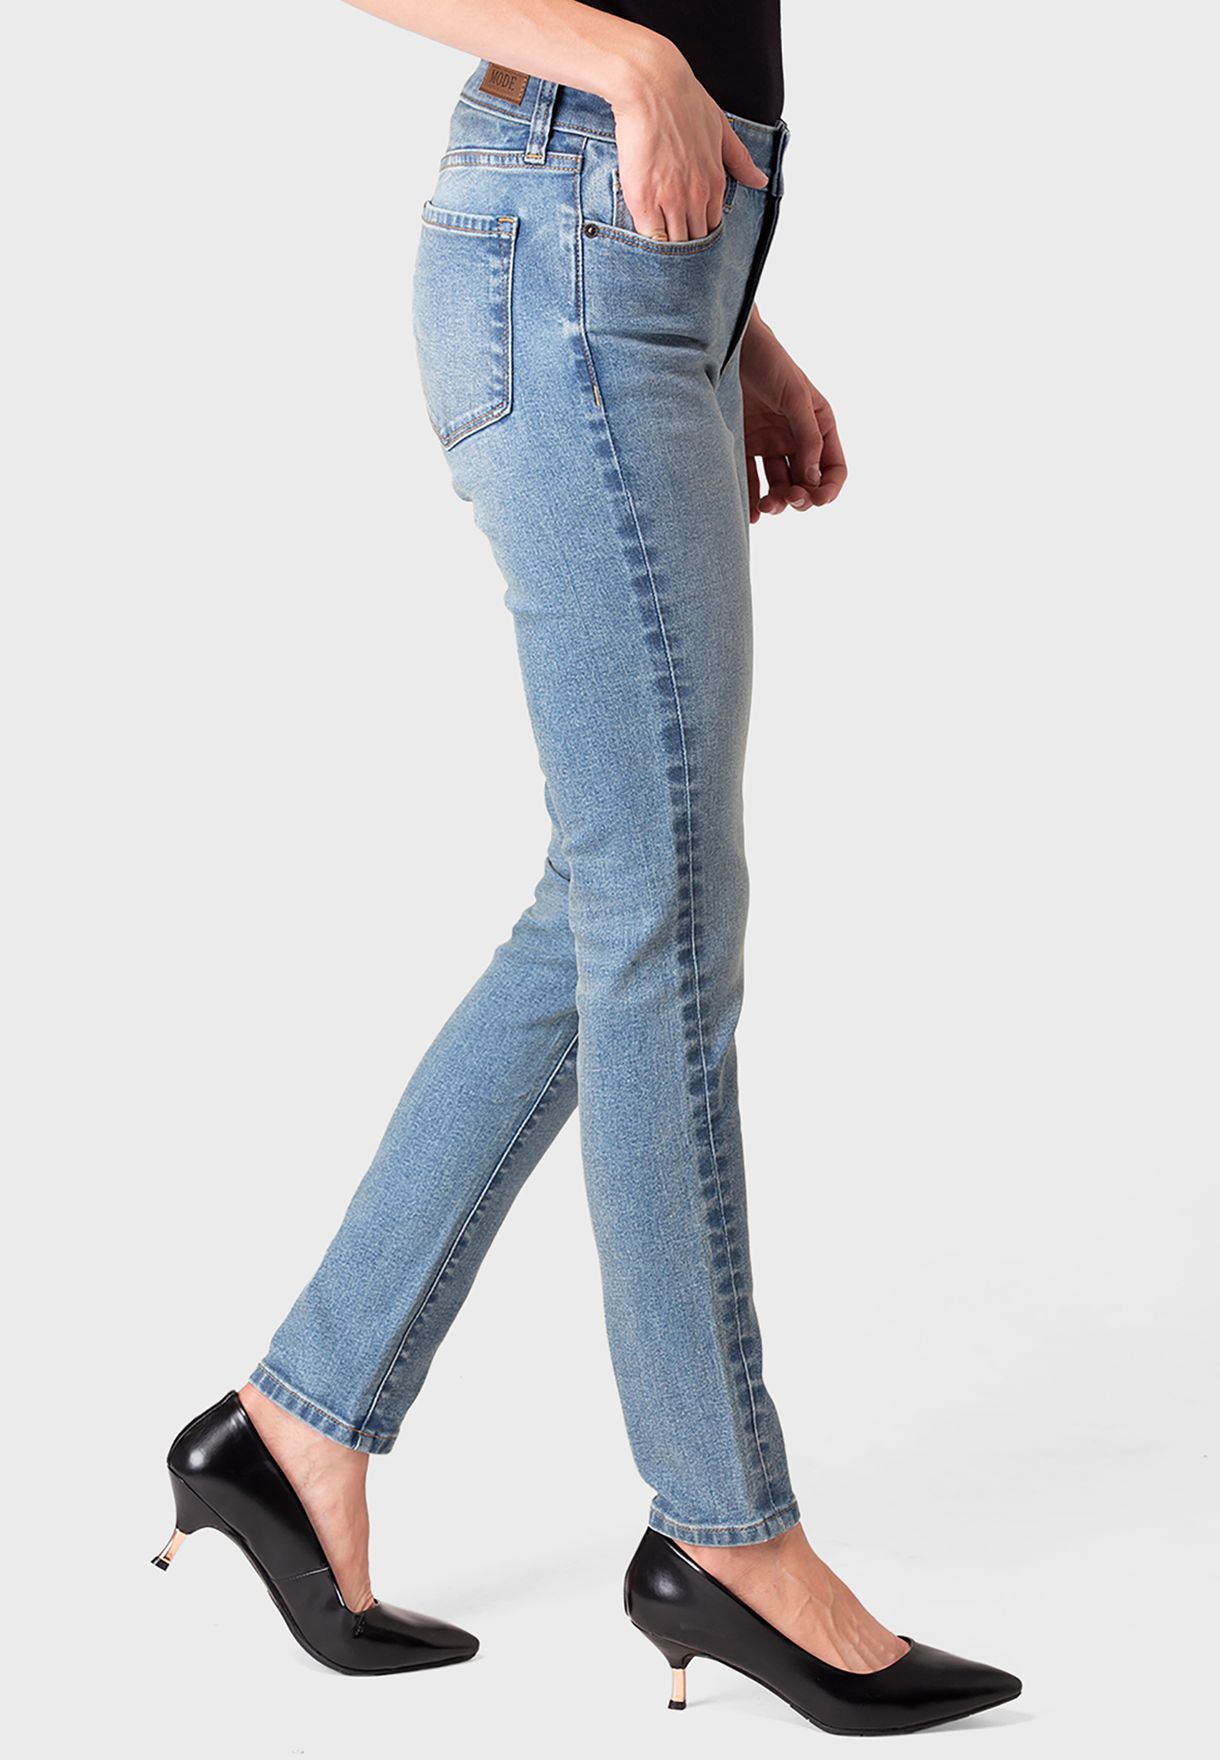 High Waist Skinny Jeans